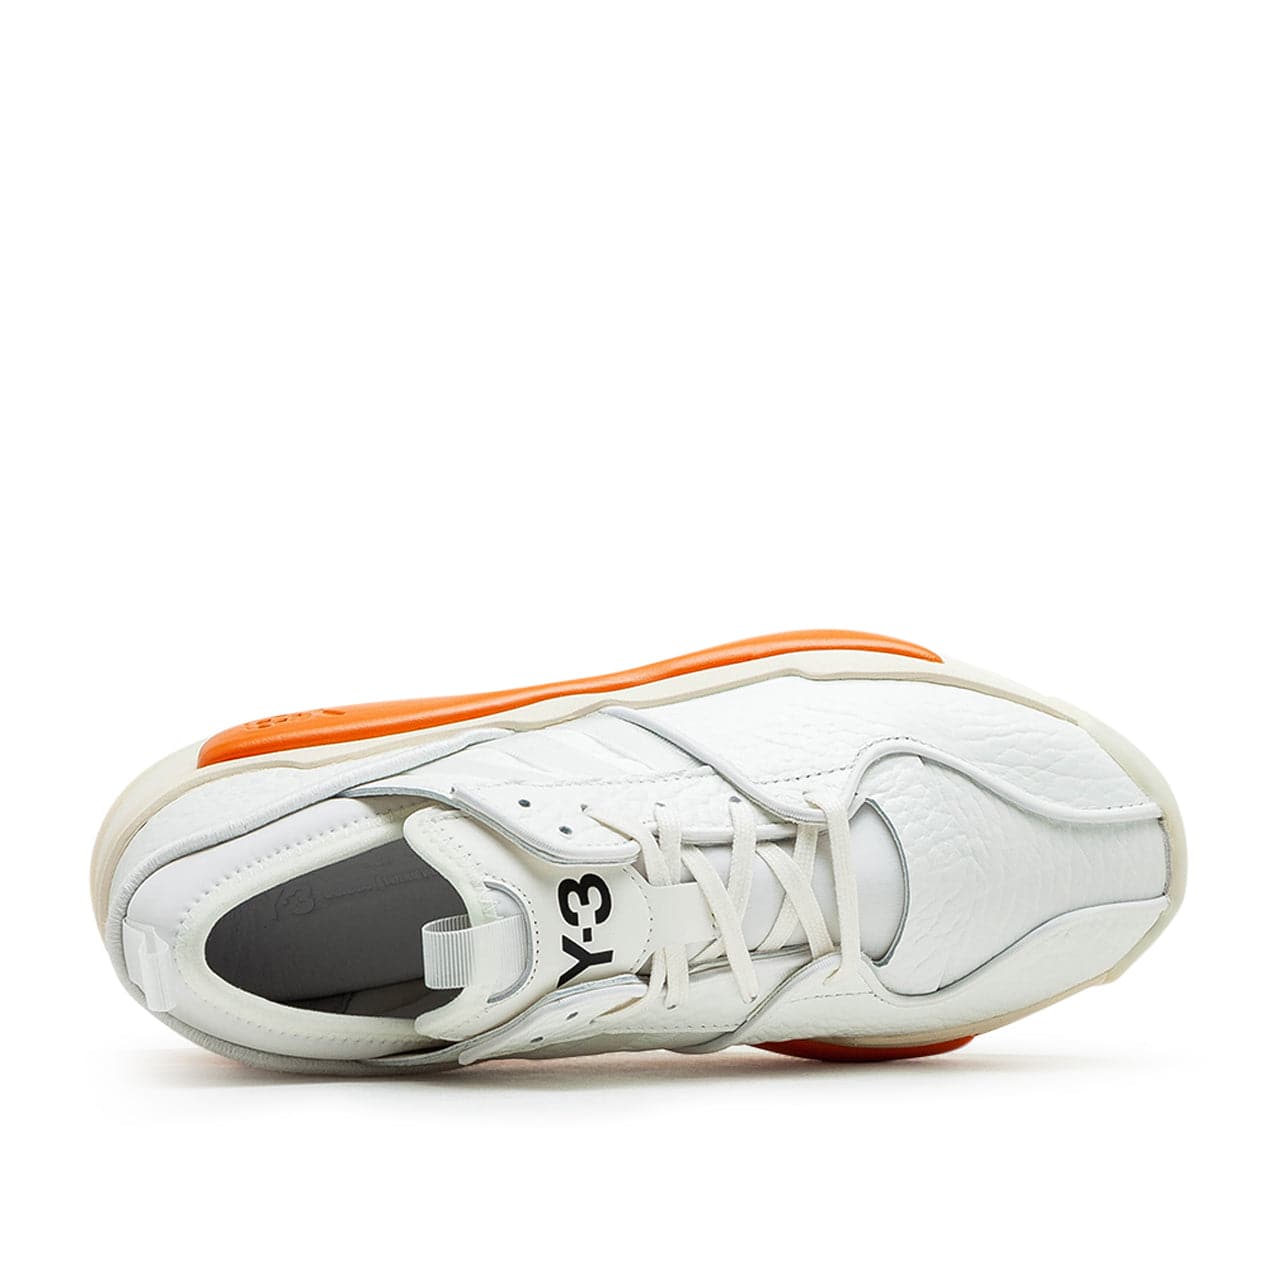 adidas Y-3 Hokori III 'Memories of Orange' (Weiß / Orange)  - Allike Store